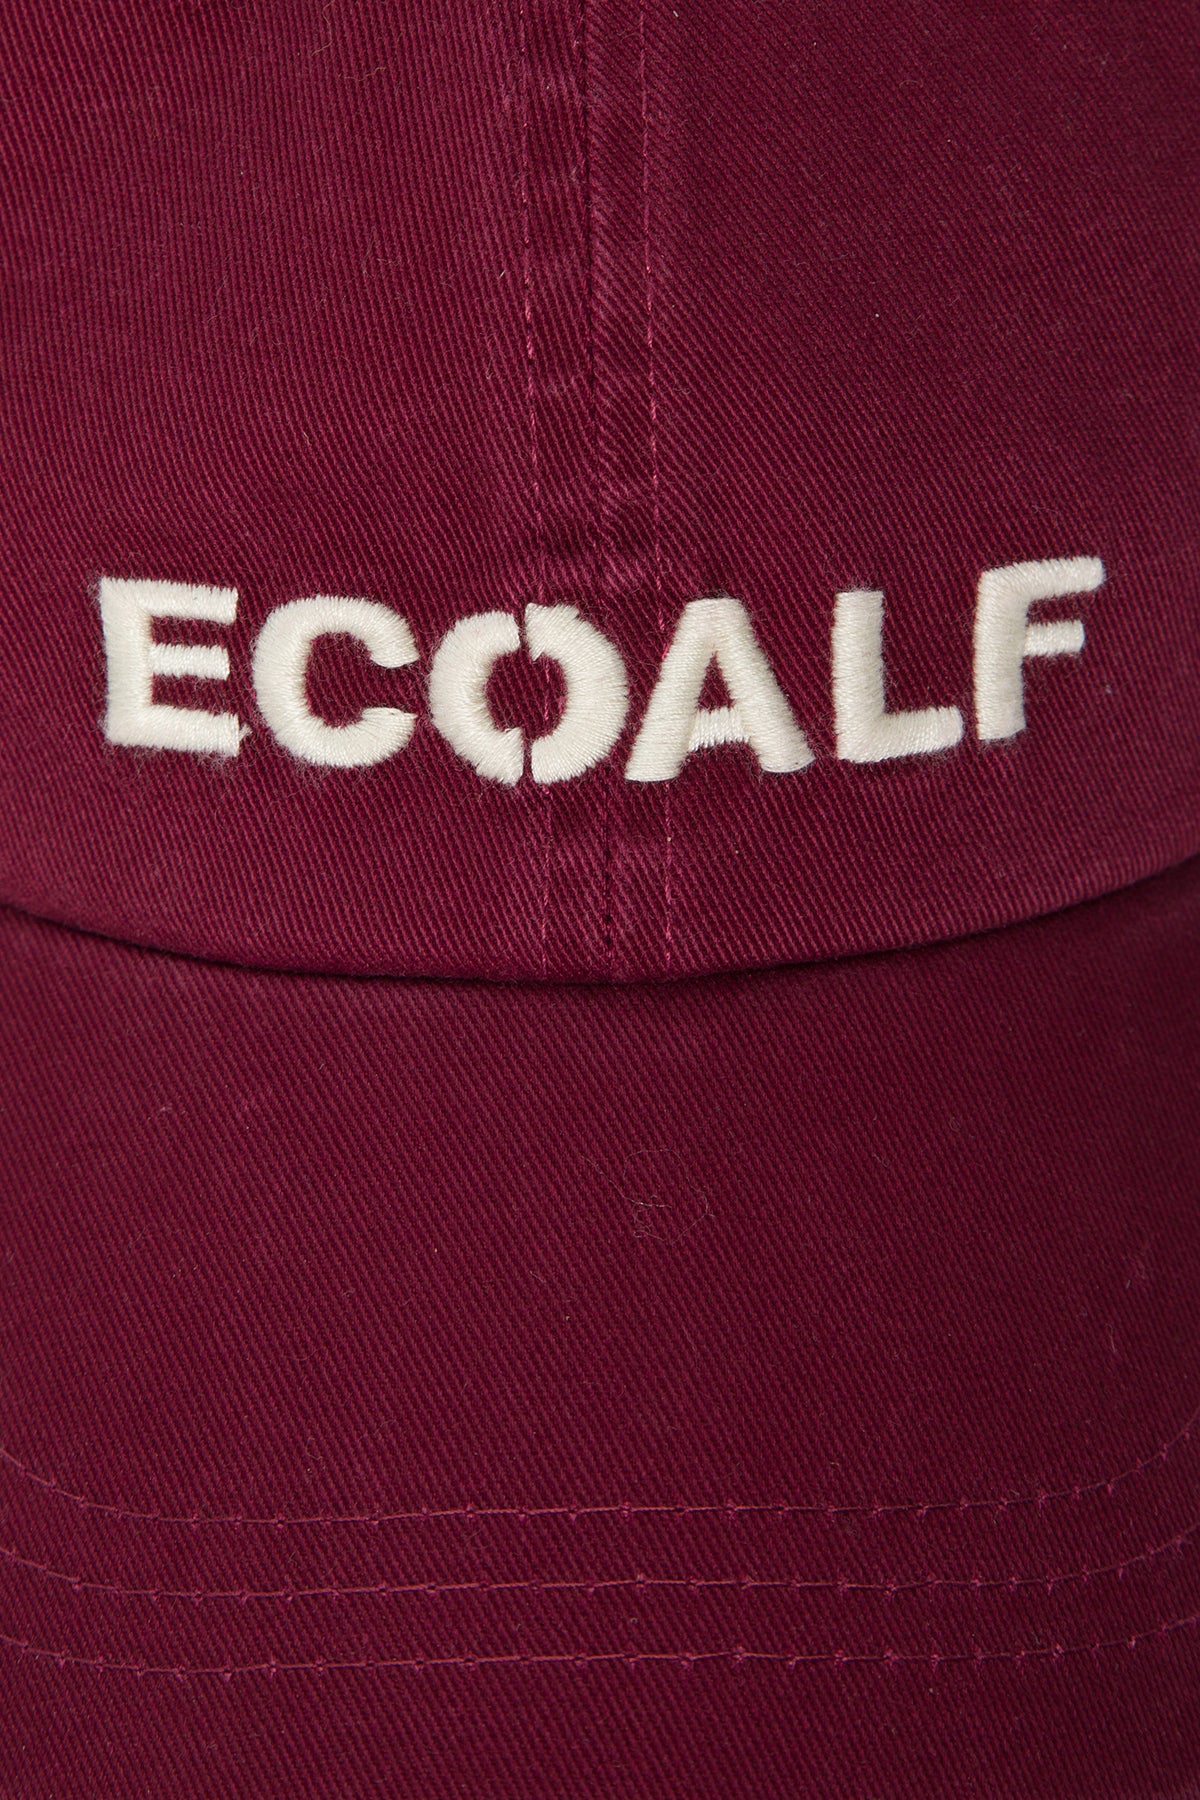 PURPLE ECOALF CAP 